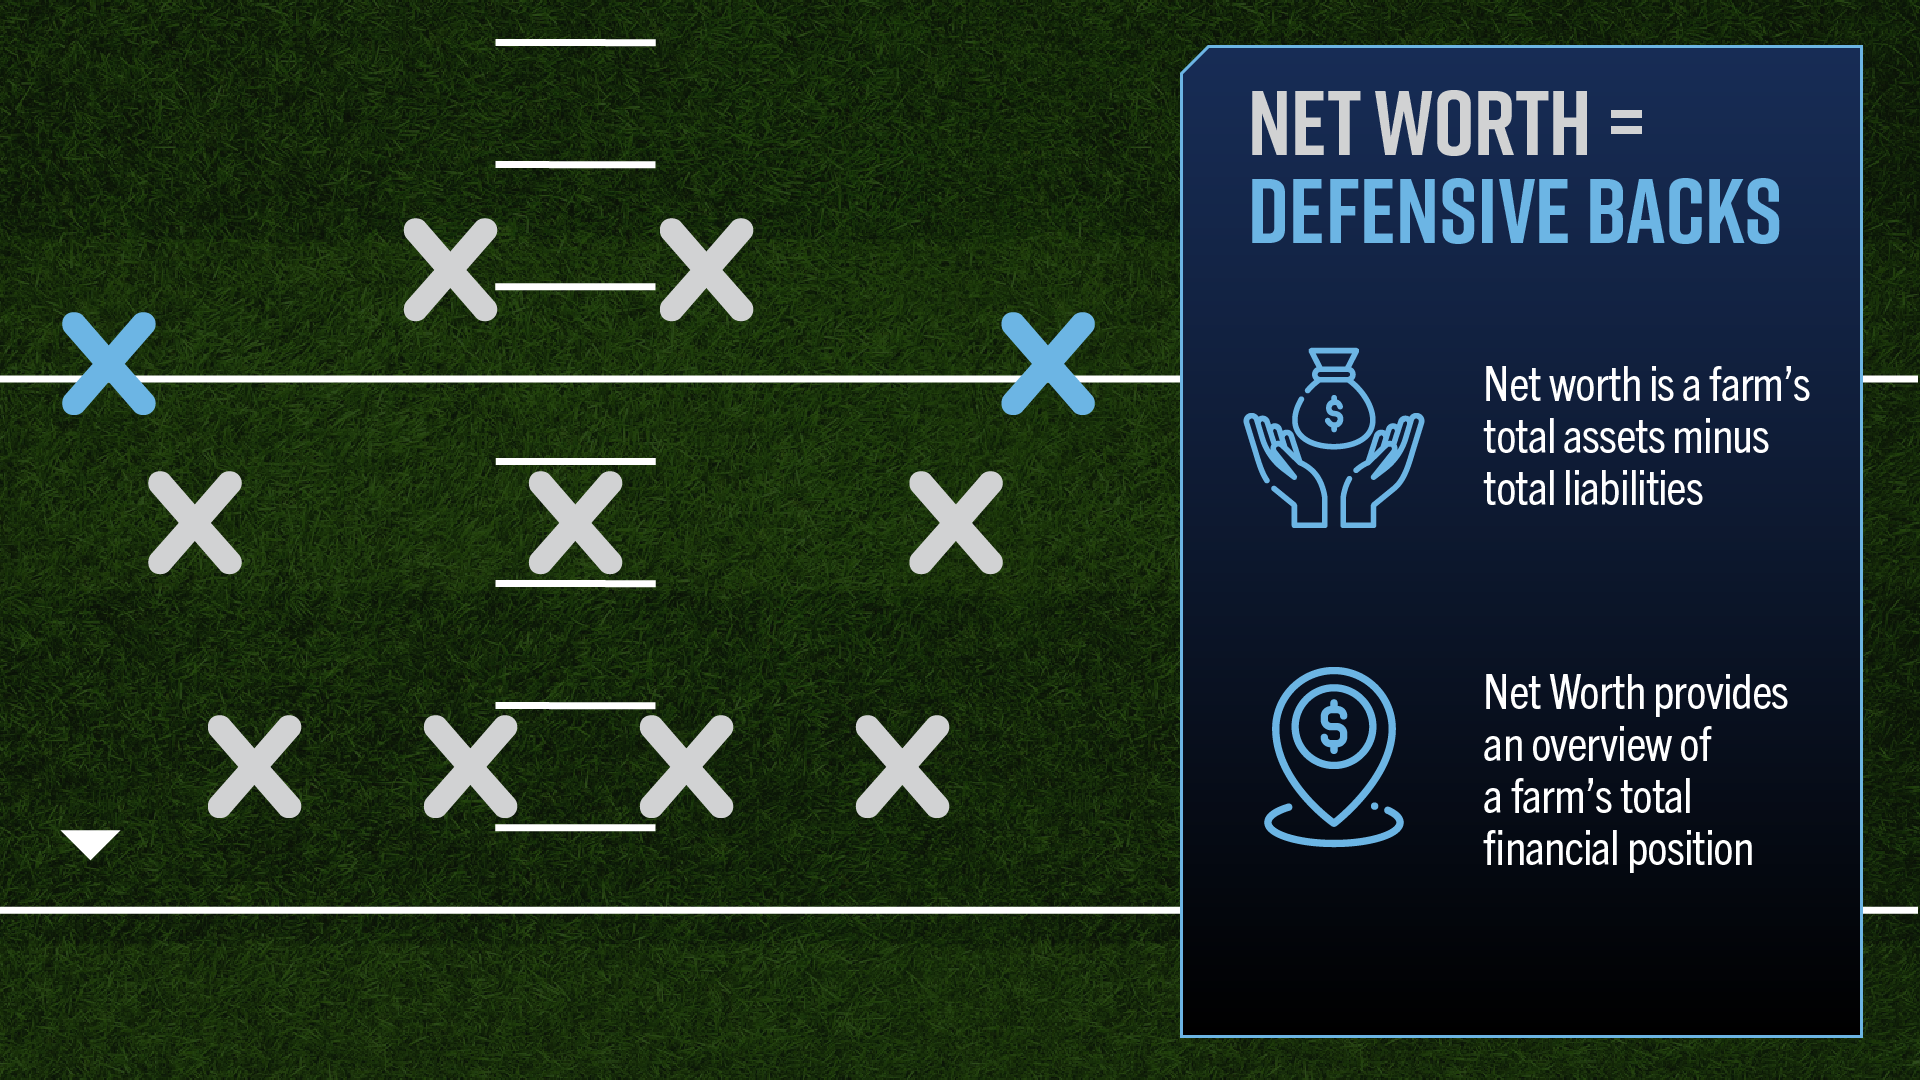 Net worth defensive backs